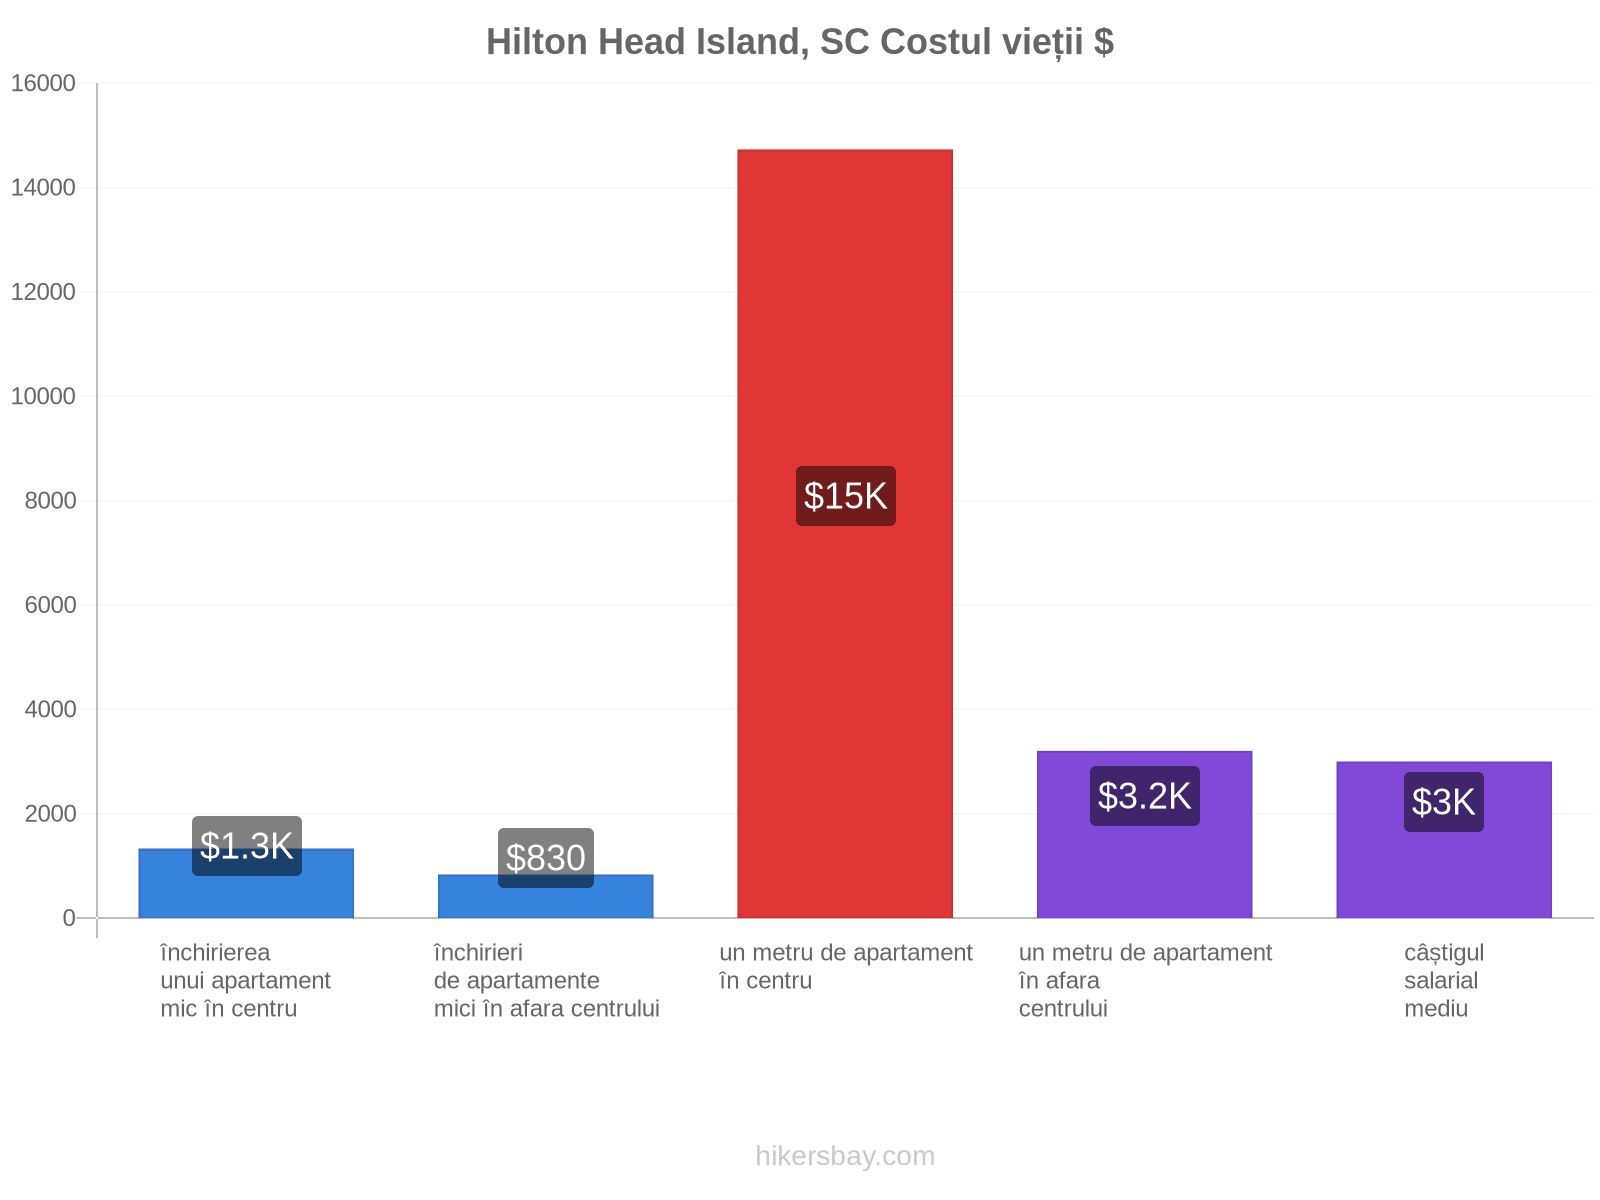 Hilton Head Island, SC costul vieții hikersbay.com